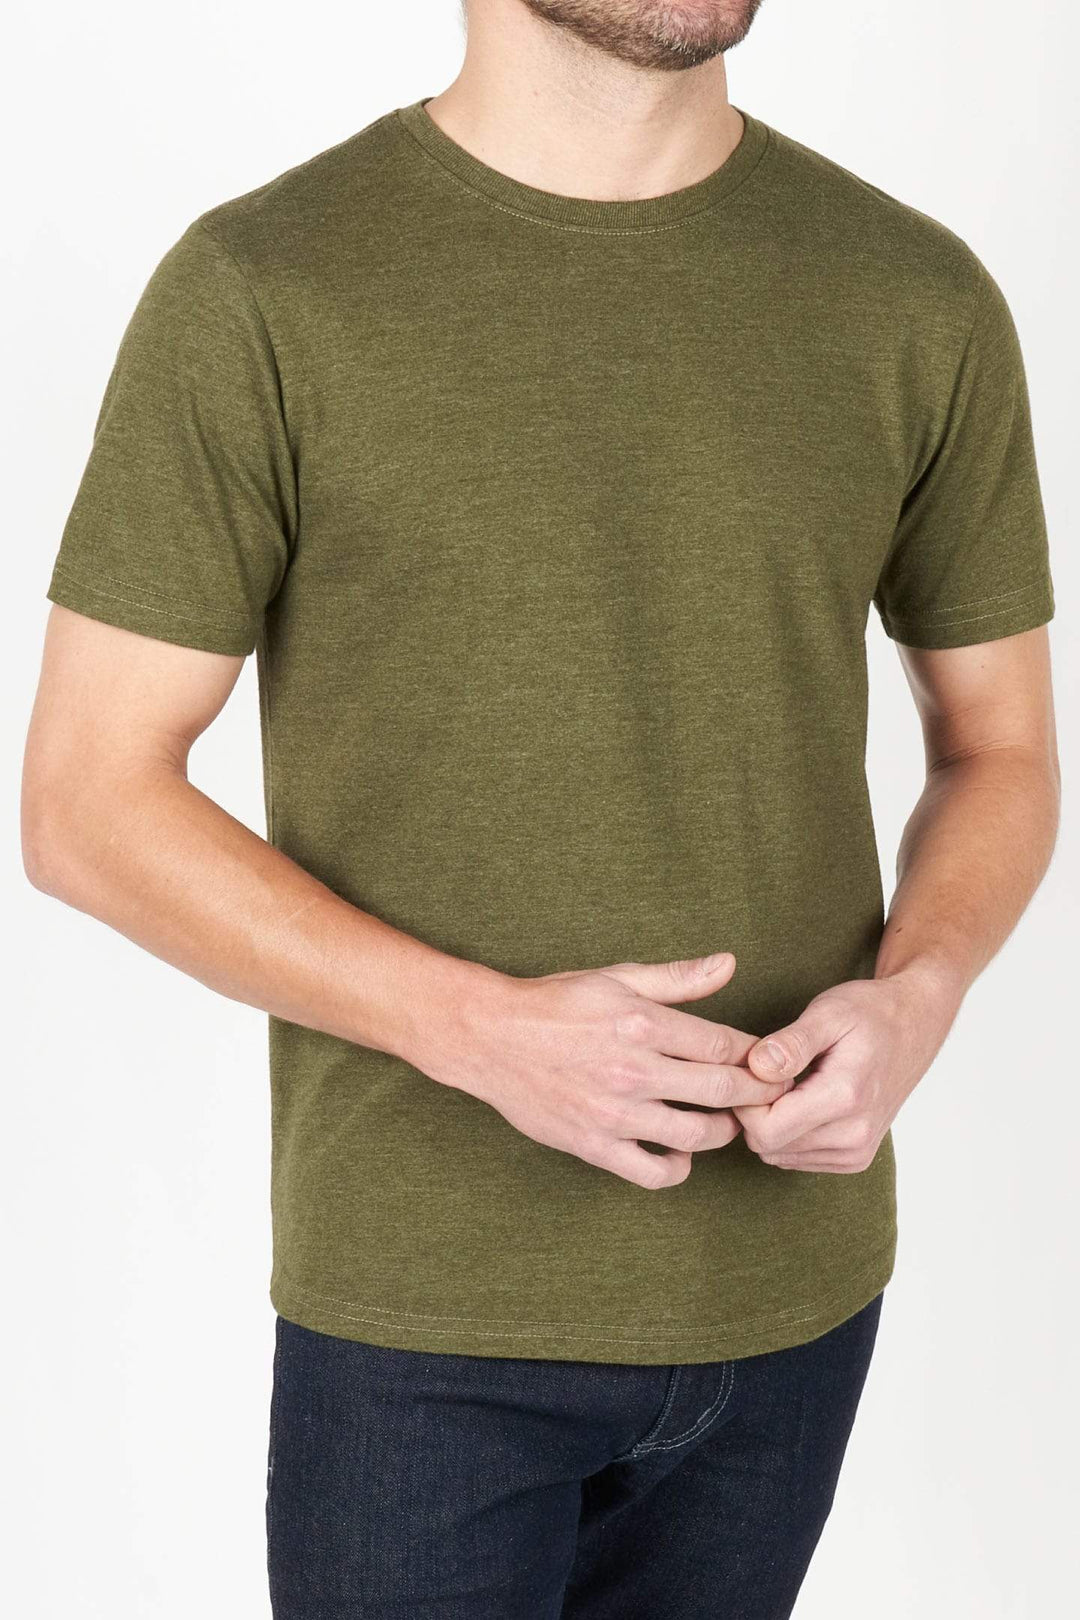 Buy Heather Olive Crew Neck T-Shirt for Short Men | Ash & Erie   T-Shirts